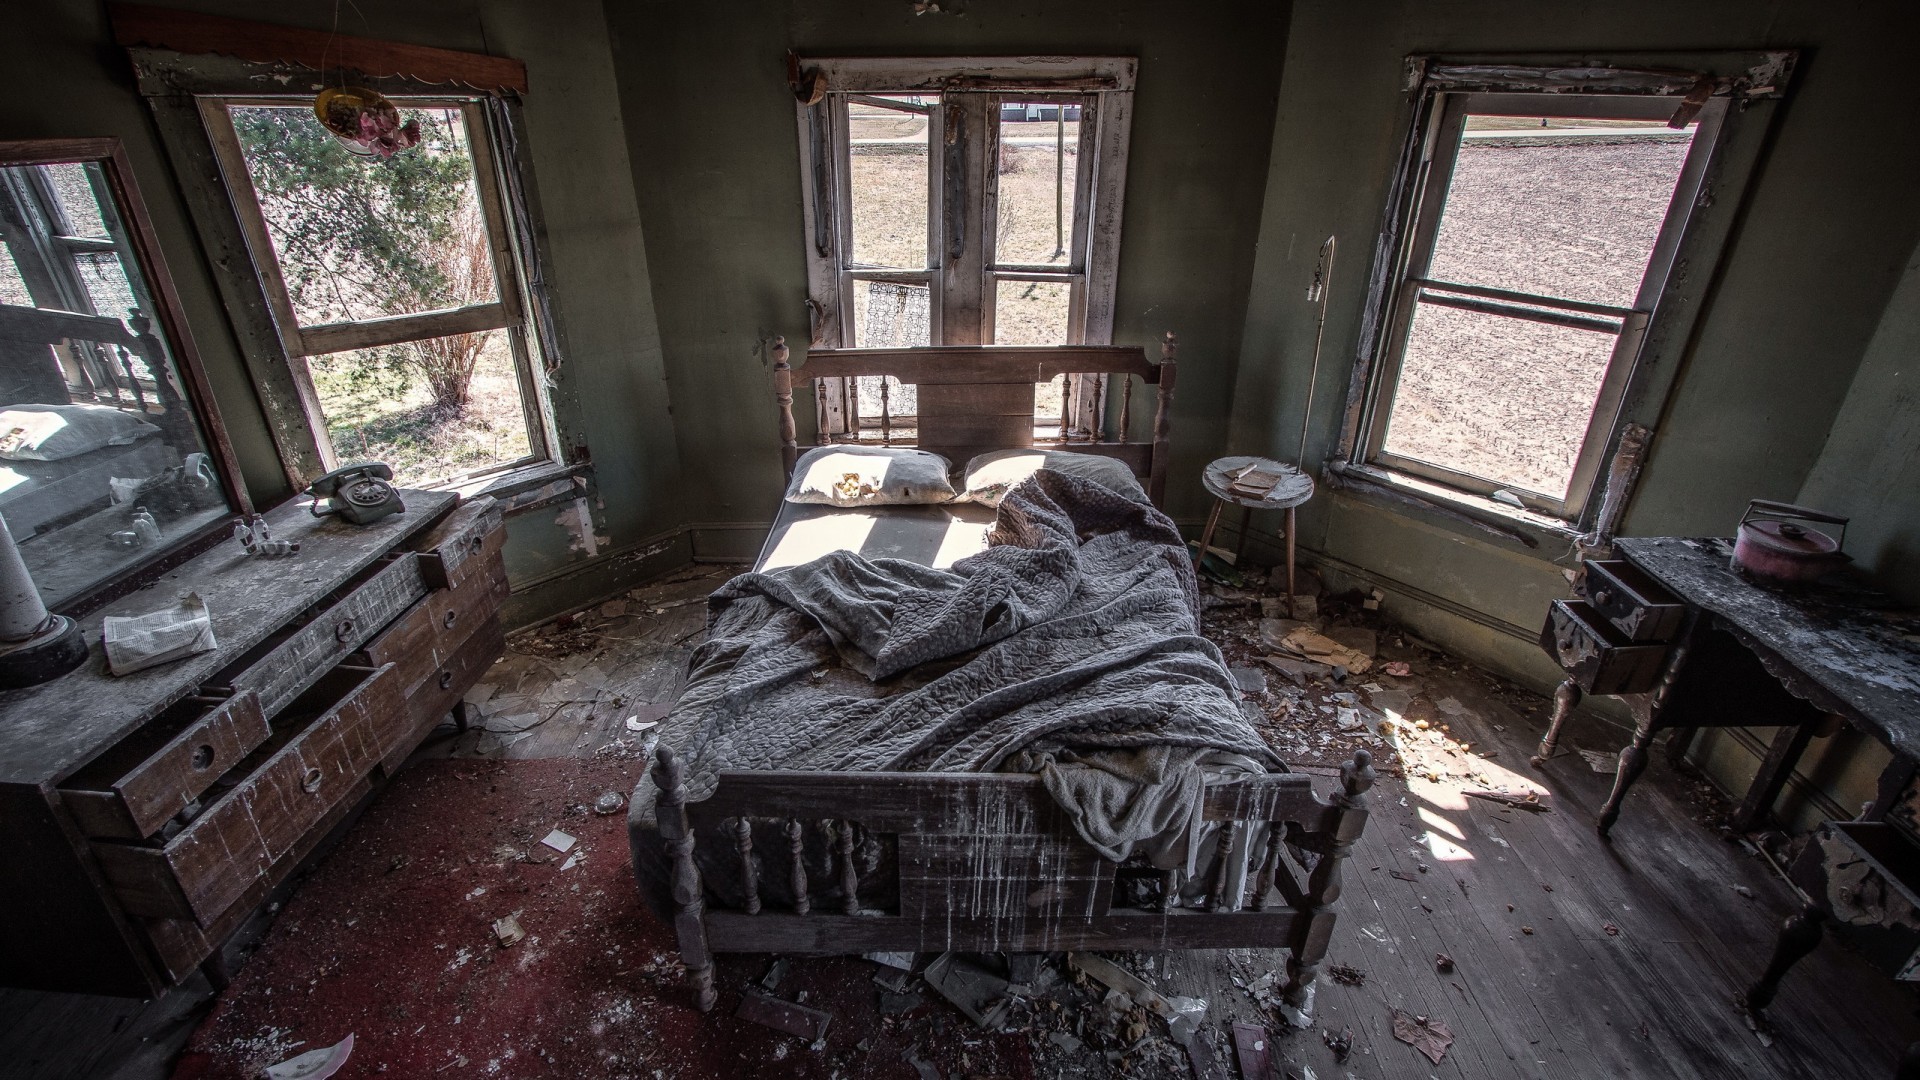 General 1920x1080 indoors abandoned room dirt bed ruins